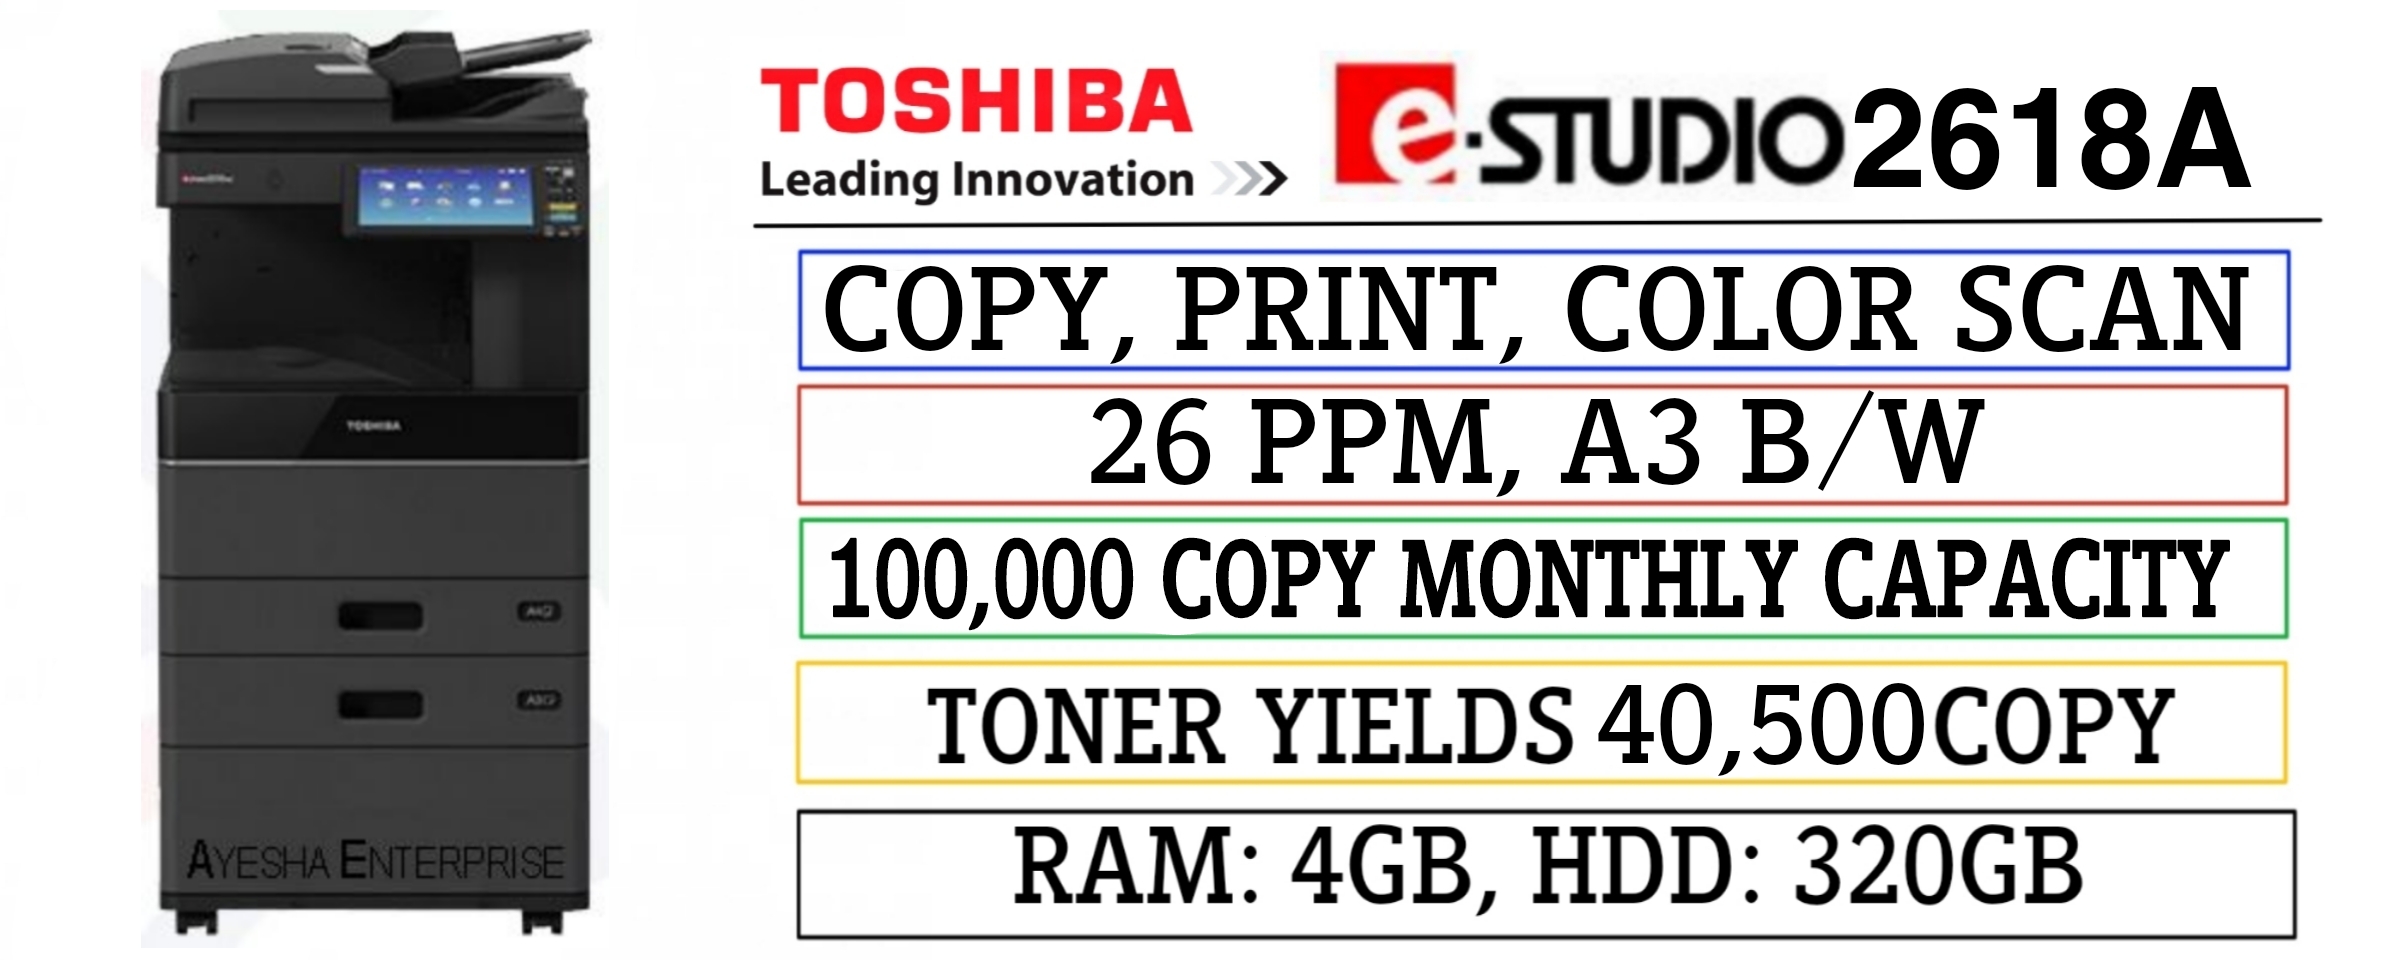 toshiba-photocopier-machine-e-studio-2618a